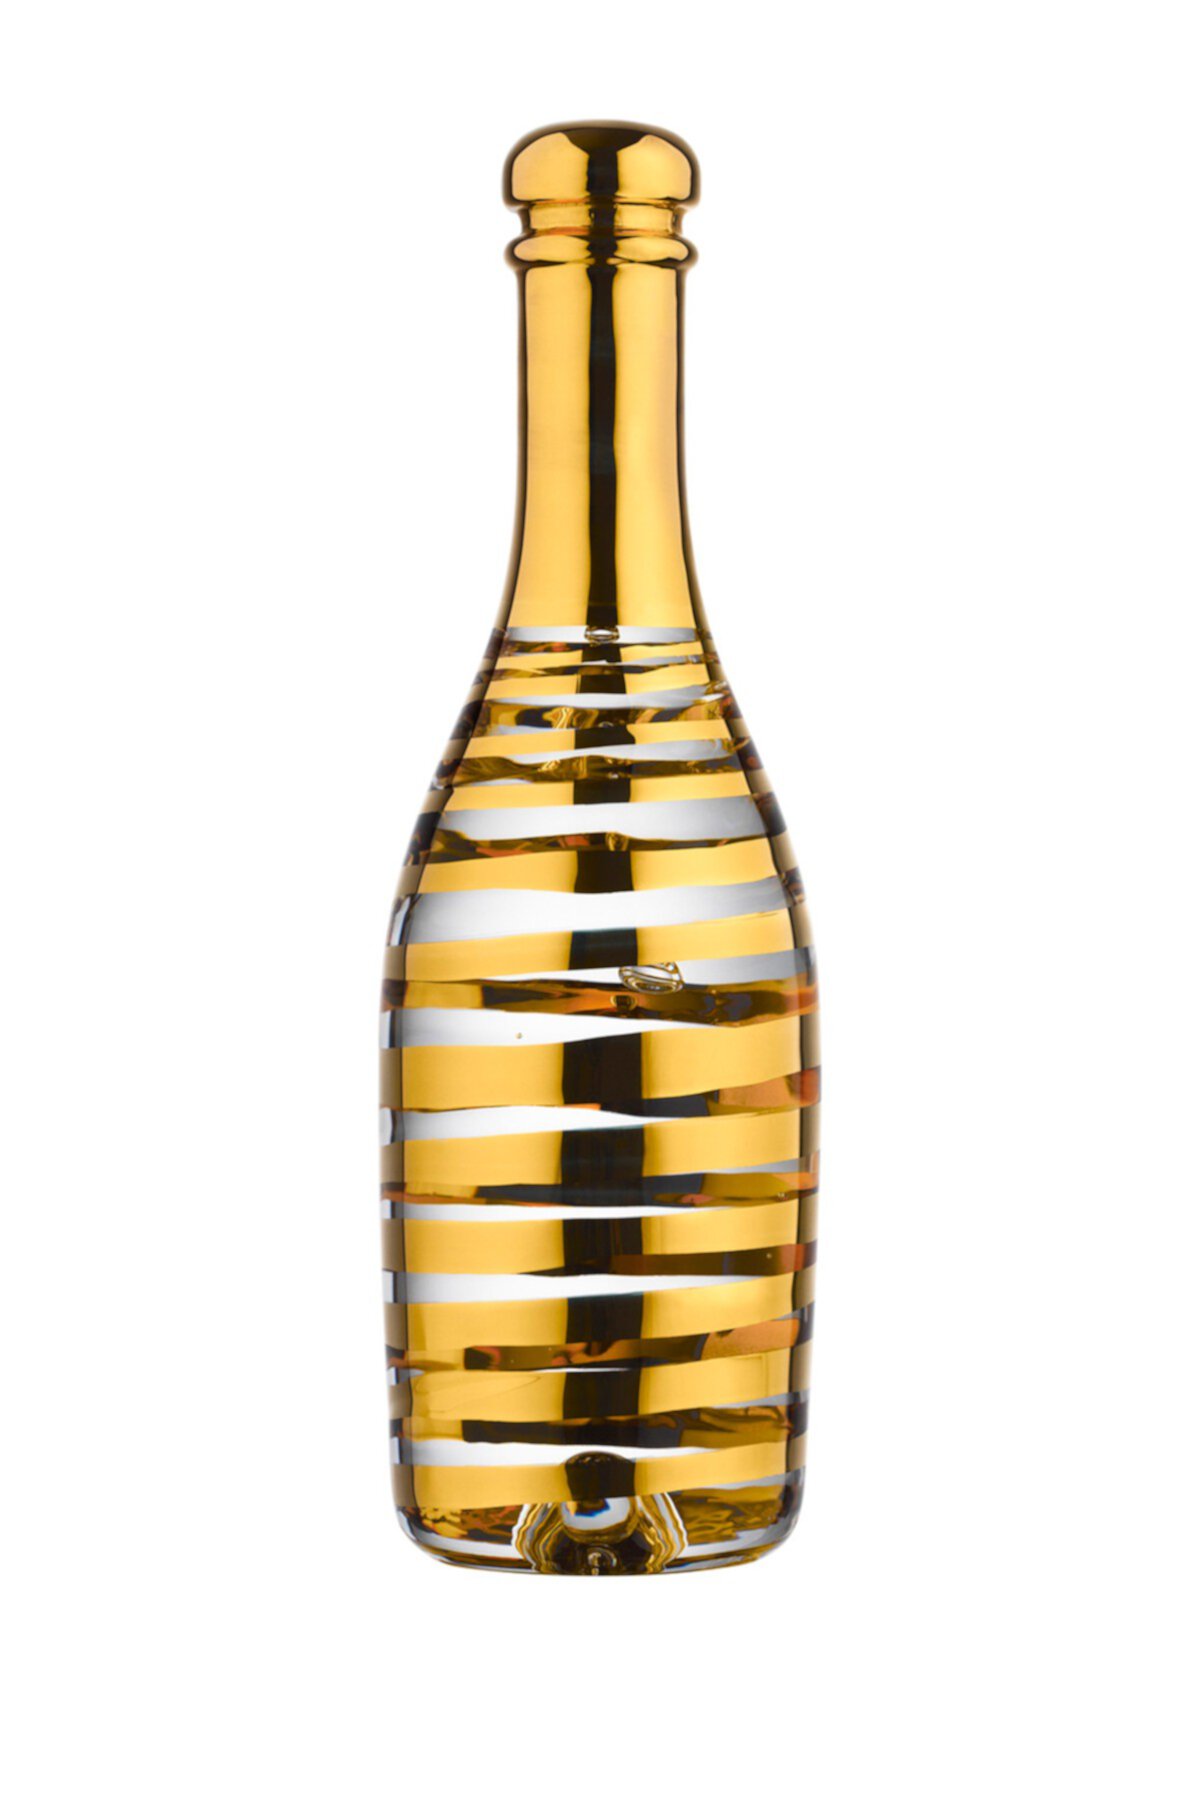 Crystal Celebrate Champagne Bottle - Gold Kosta Boda